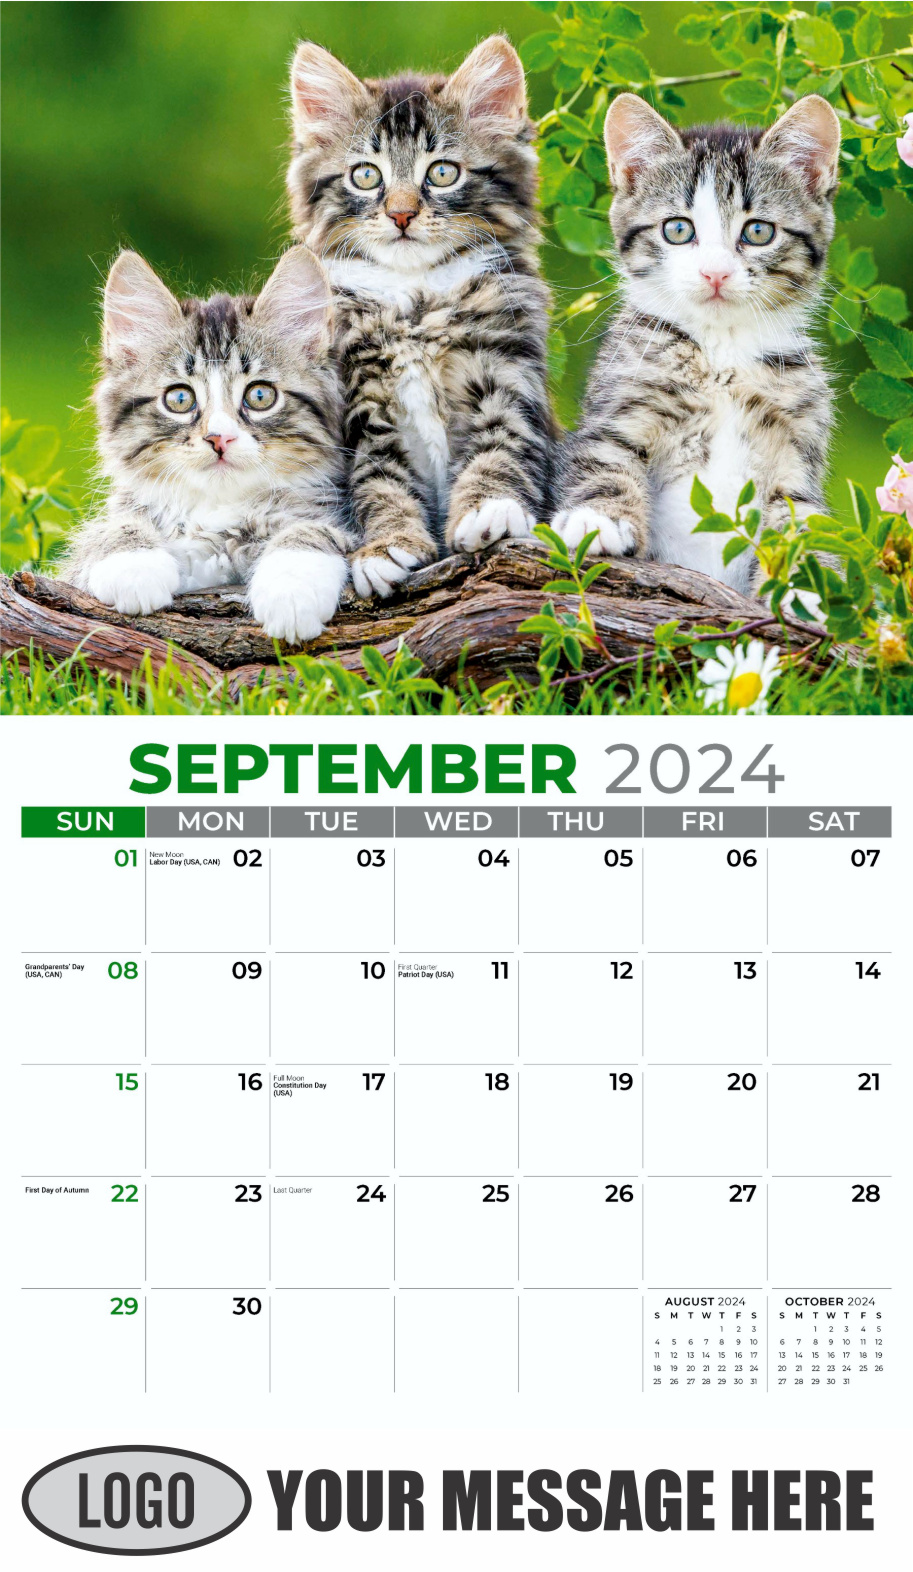 Kittens 2024 Business Promo Wall Calendar - September